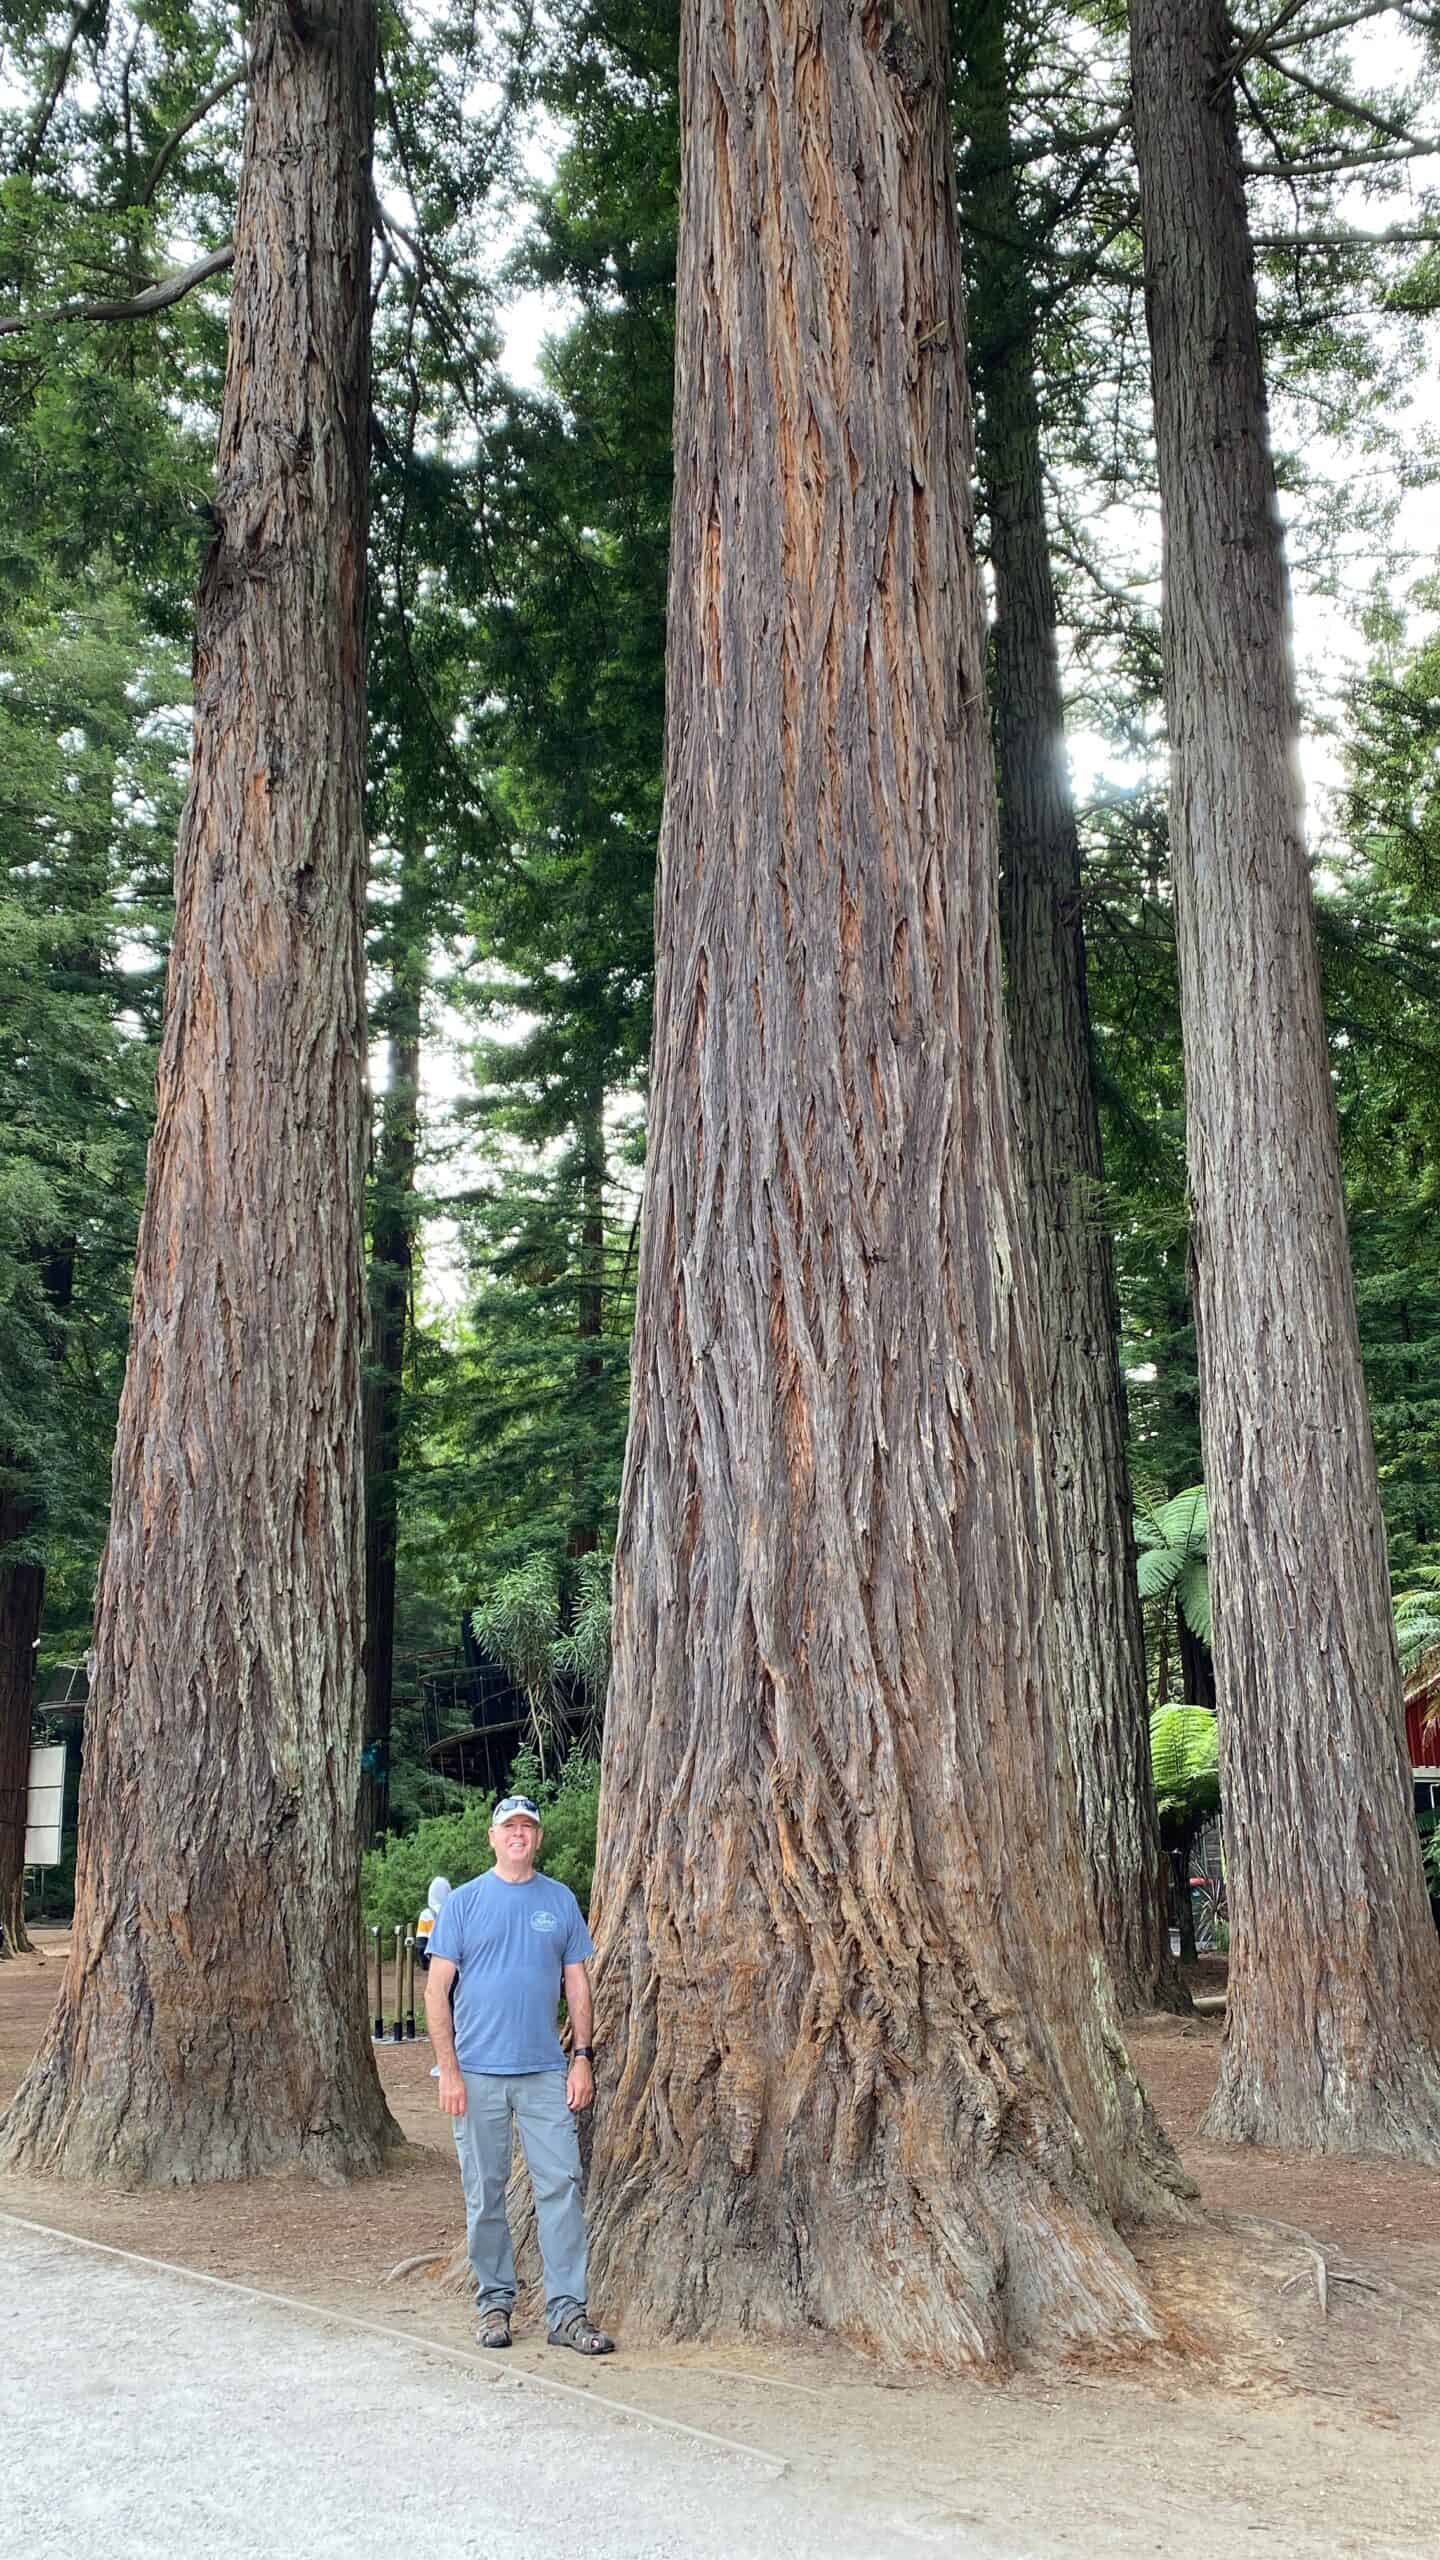 Giant redwood trees in Rotorua